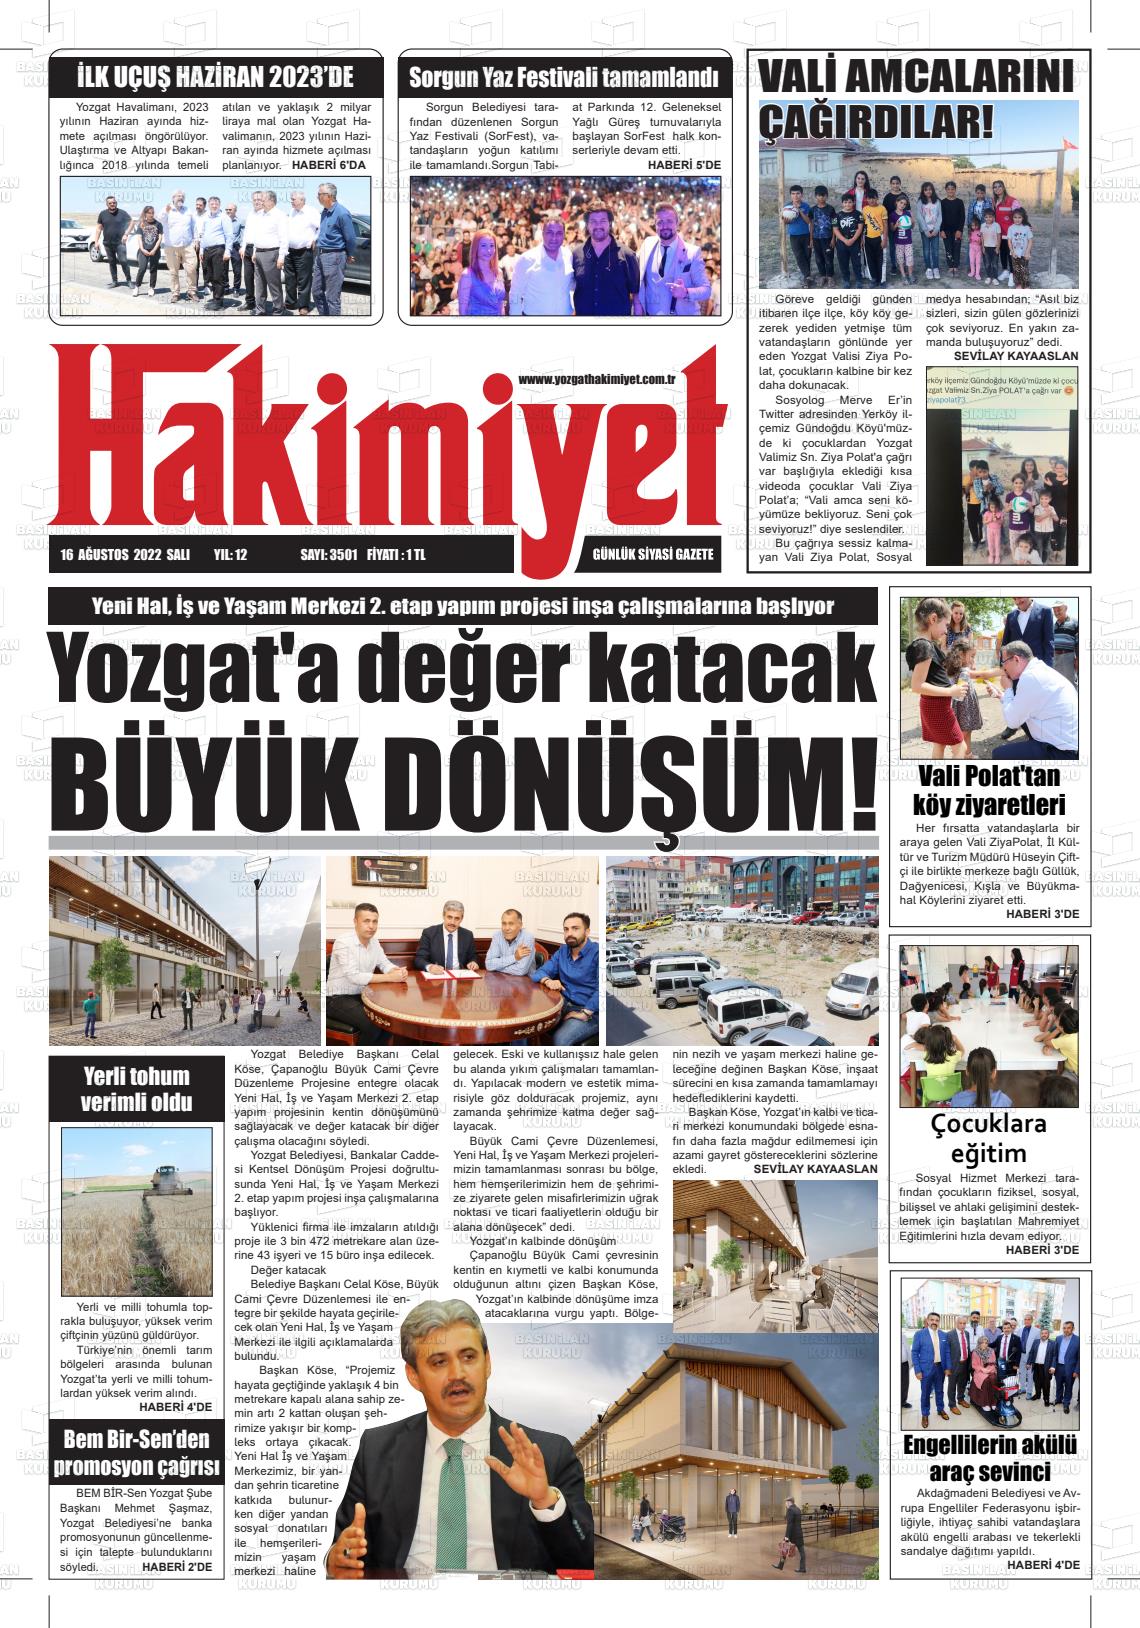 16 Ağustos 2022 Yozgat Hakimiyet Gazete Manşeti